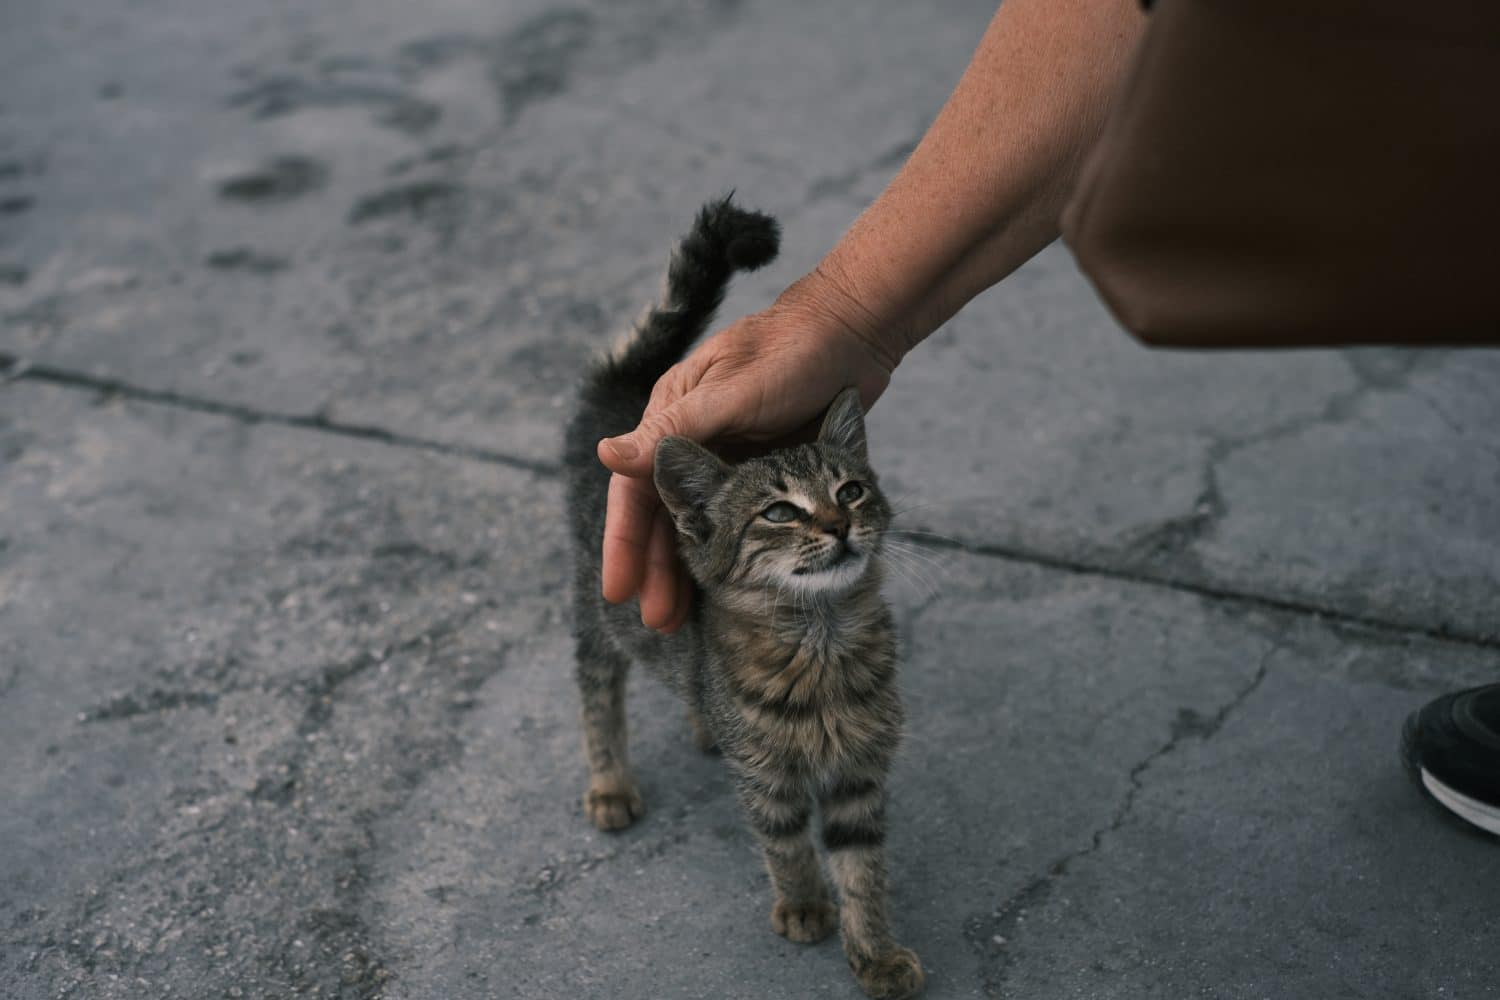 Someone petting a street kitten